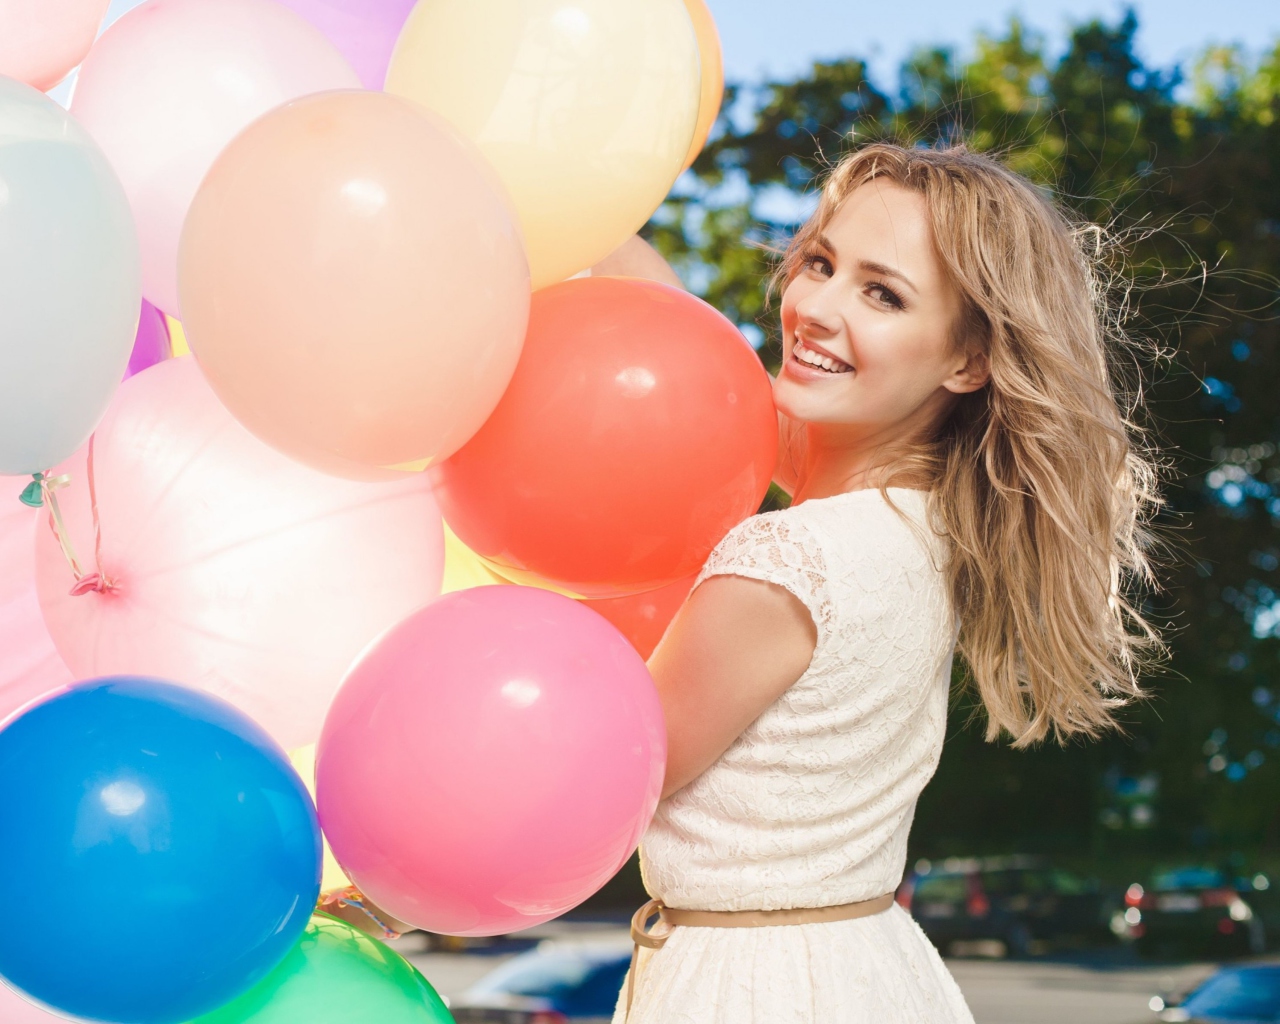 Das Smiling Girl With Balloons Wallpaper 1280x1024